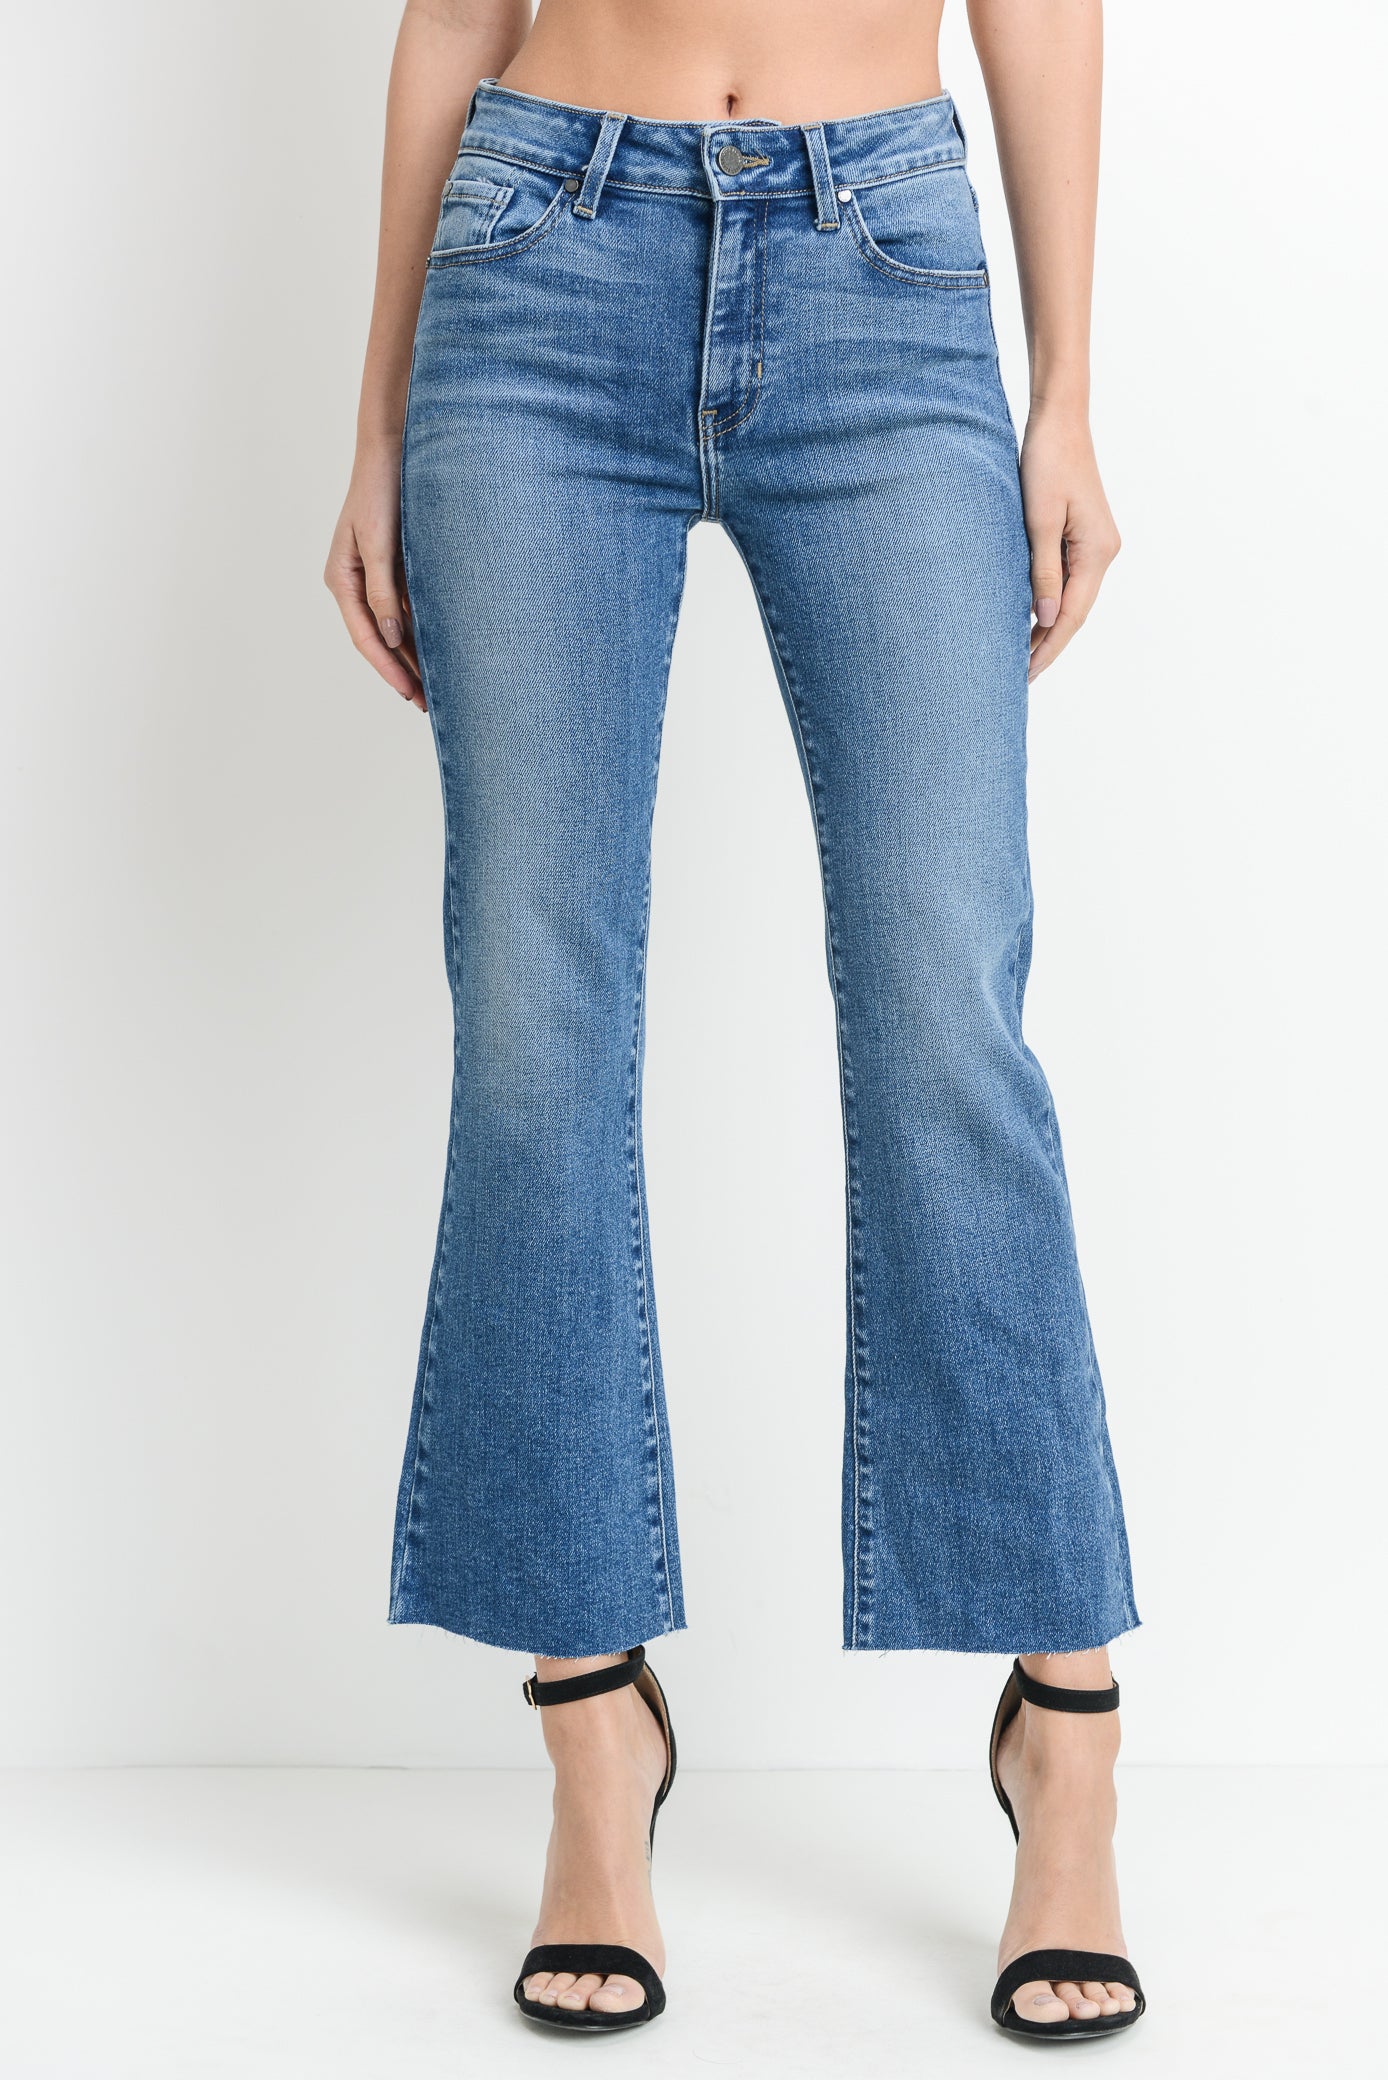 Scissor Cut Crop Flare Jeans at MARIA VINCENT Boutique – Maria Vincent ...